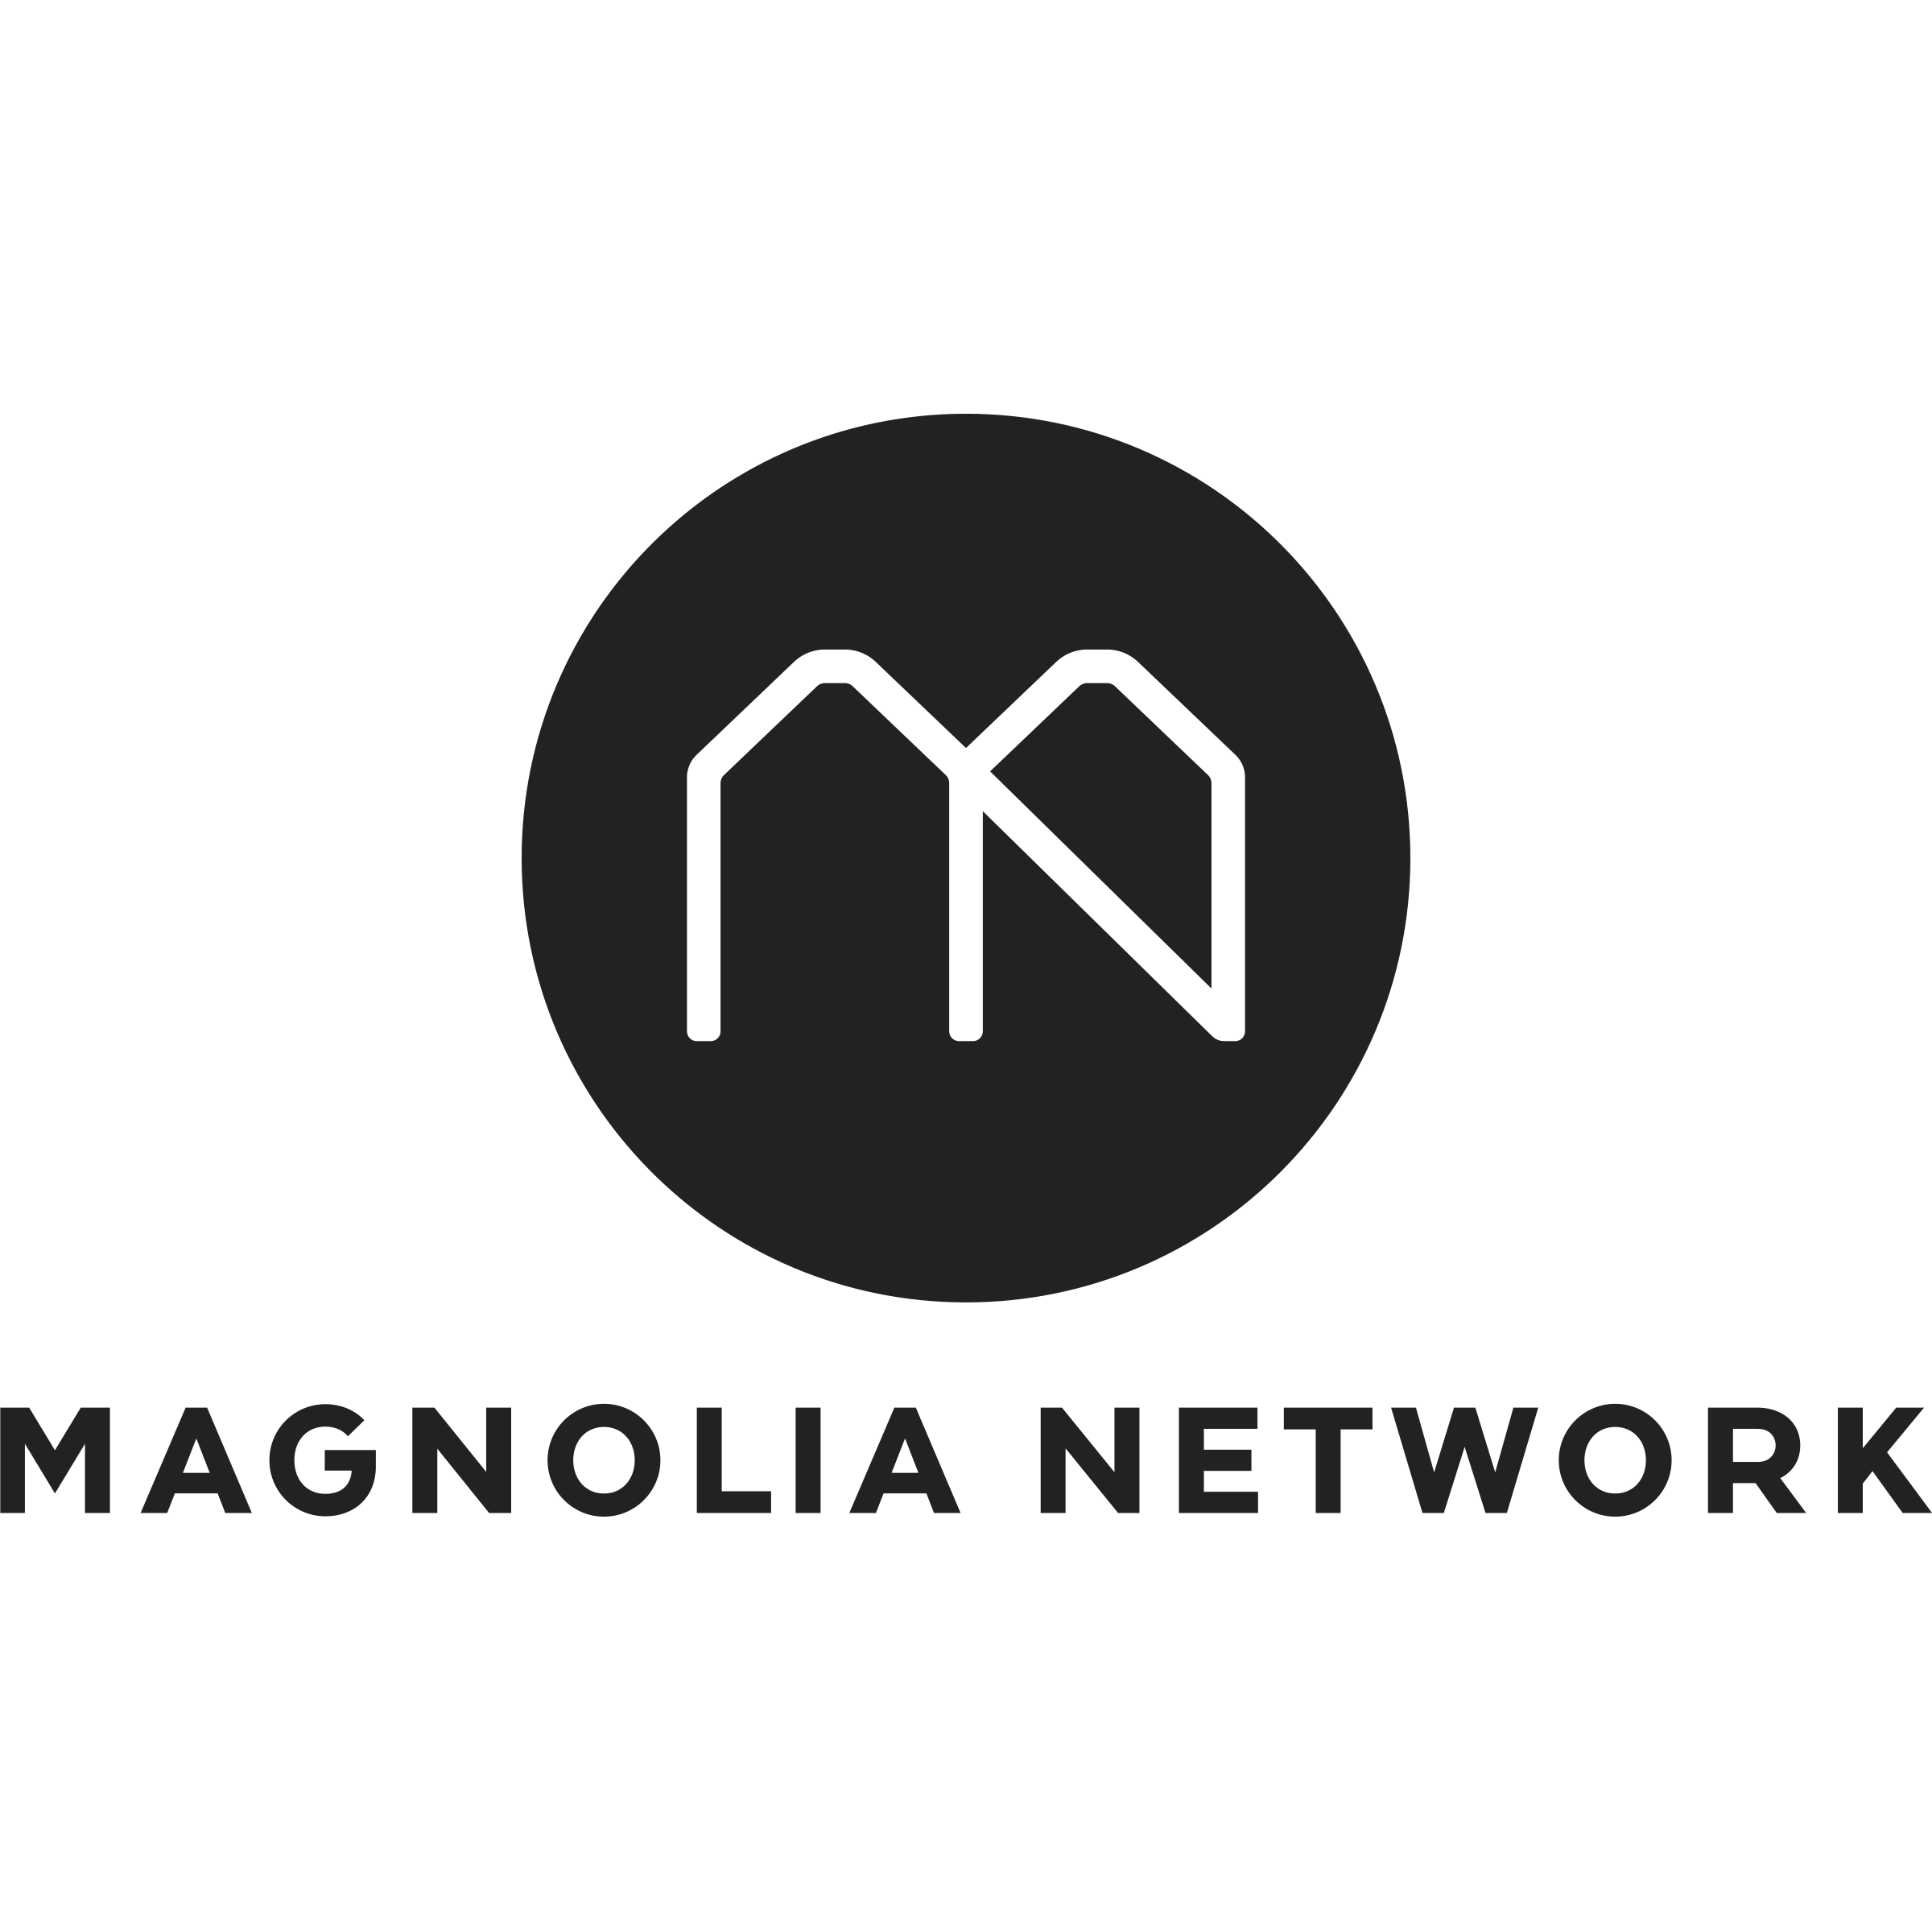 Channel logo for Magnolia Network 